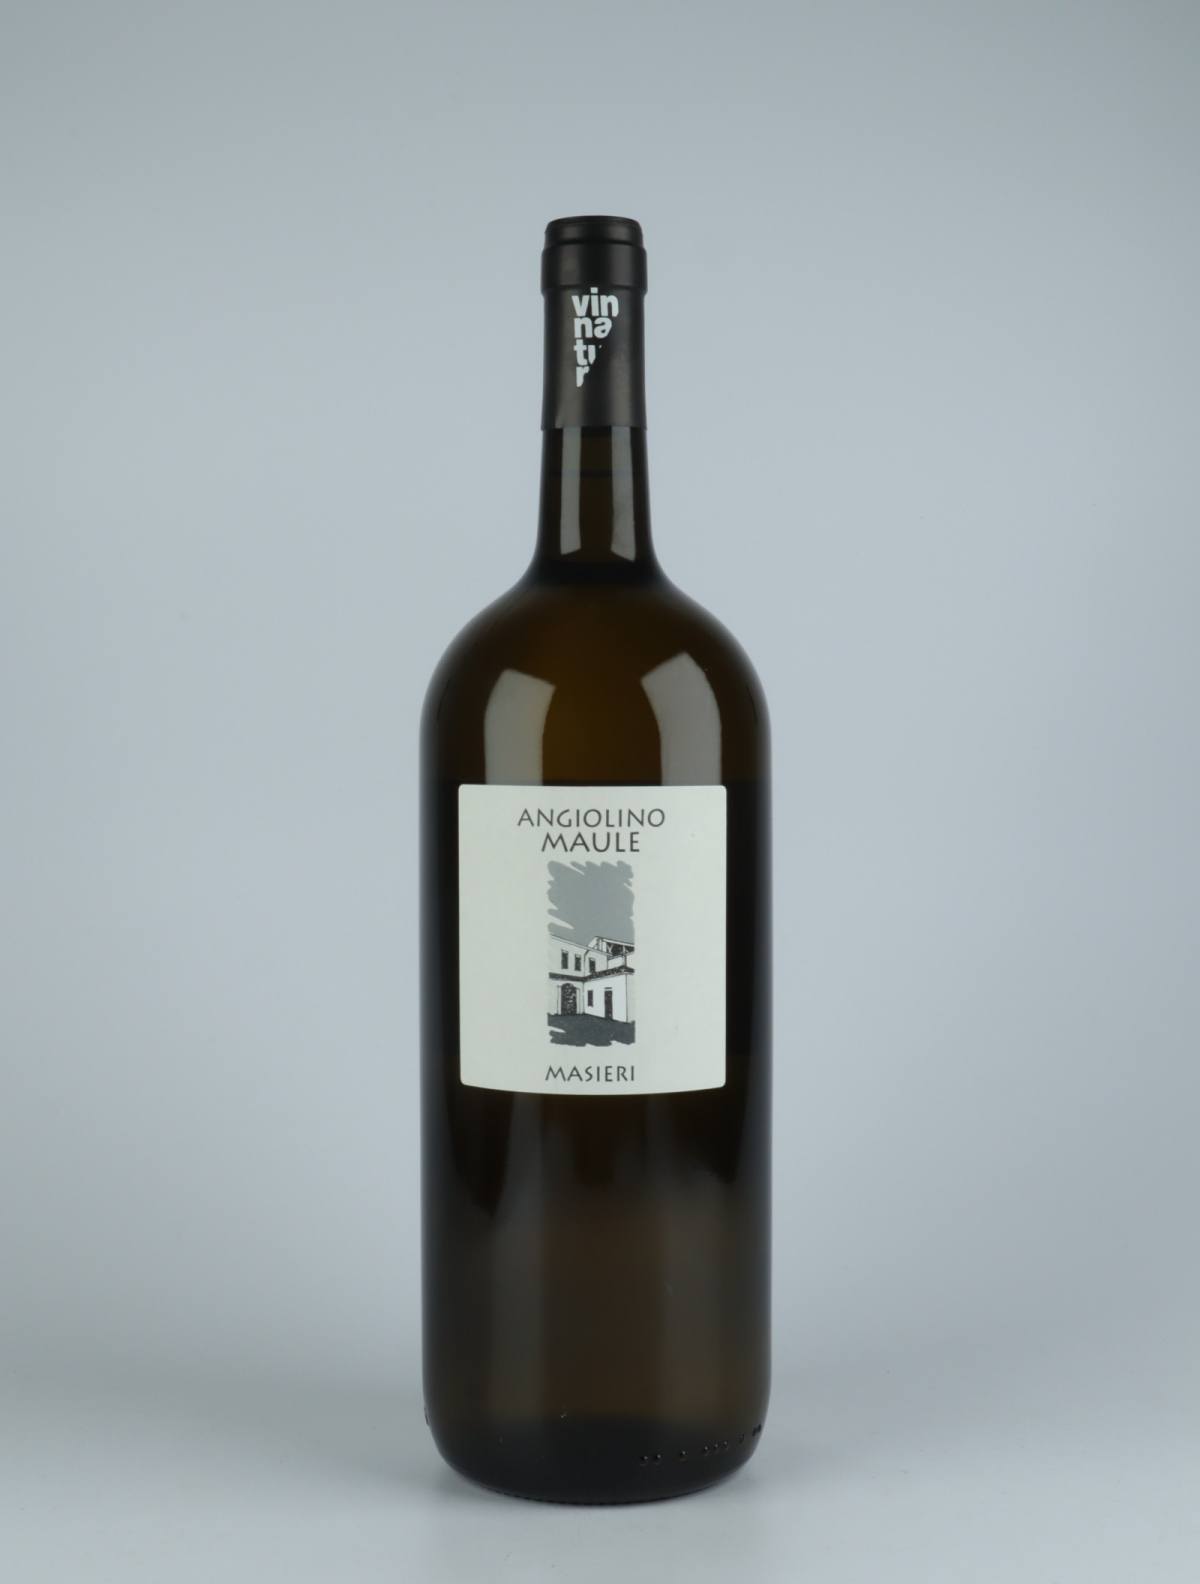 En flaske 2020 Masieri Hvidvin fra La Biancara di Angiolino Maule, Veneto i Italien